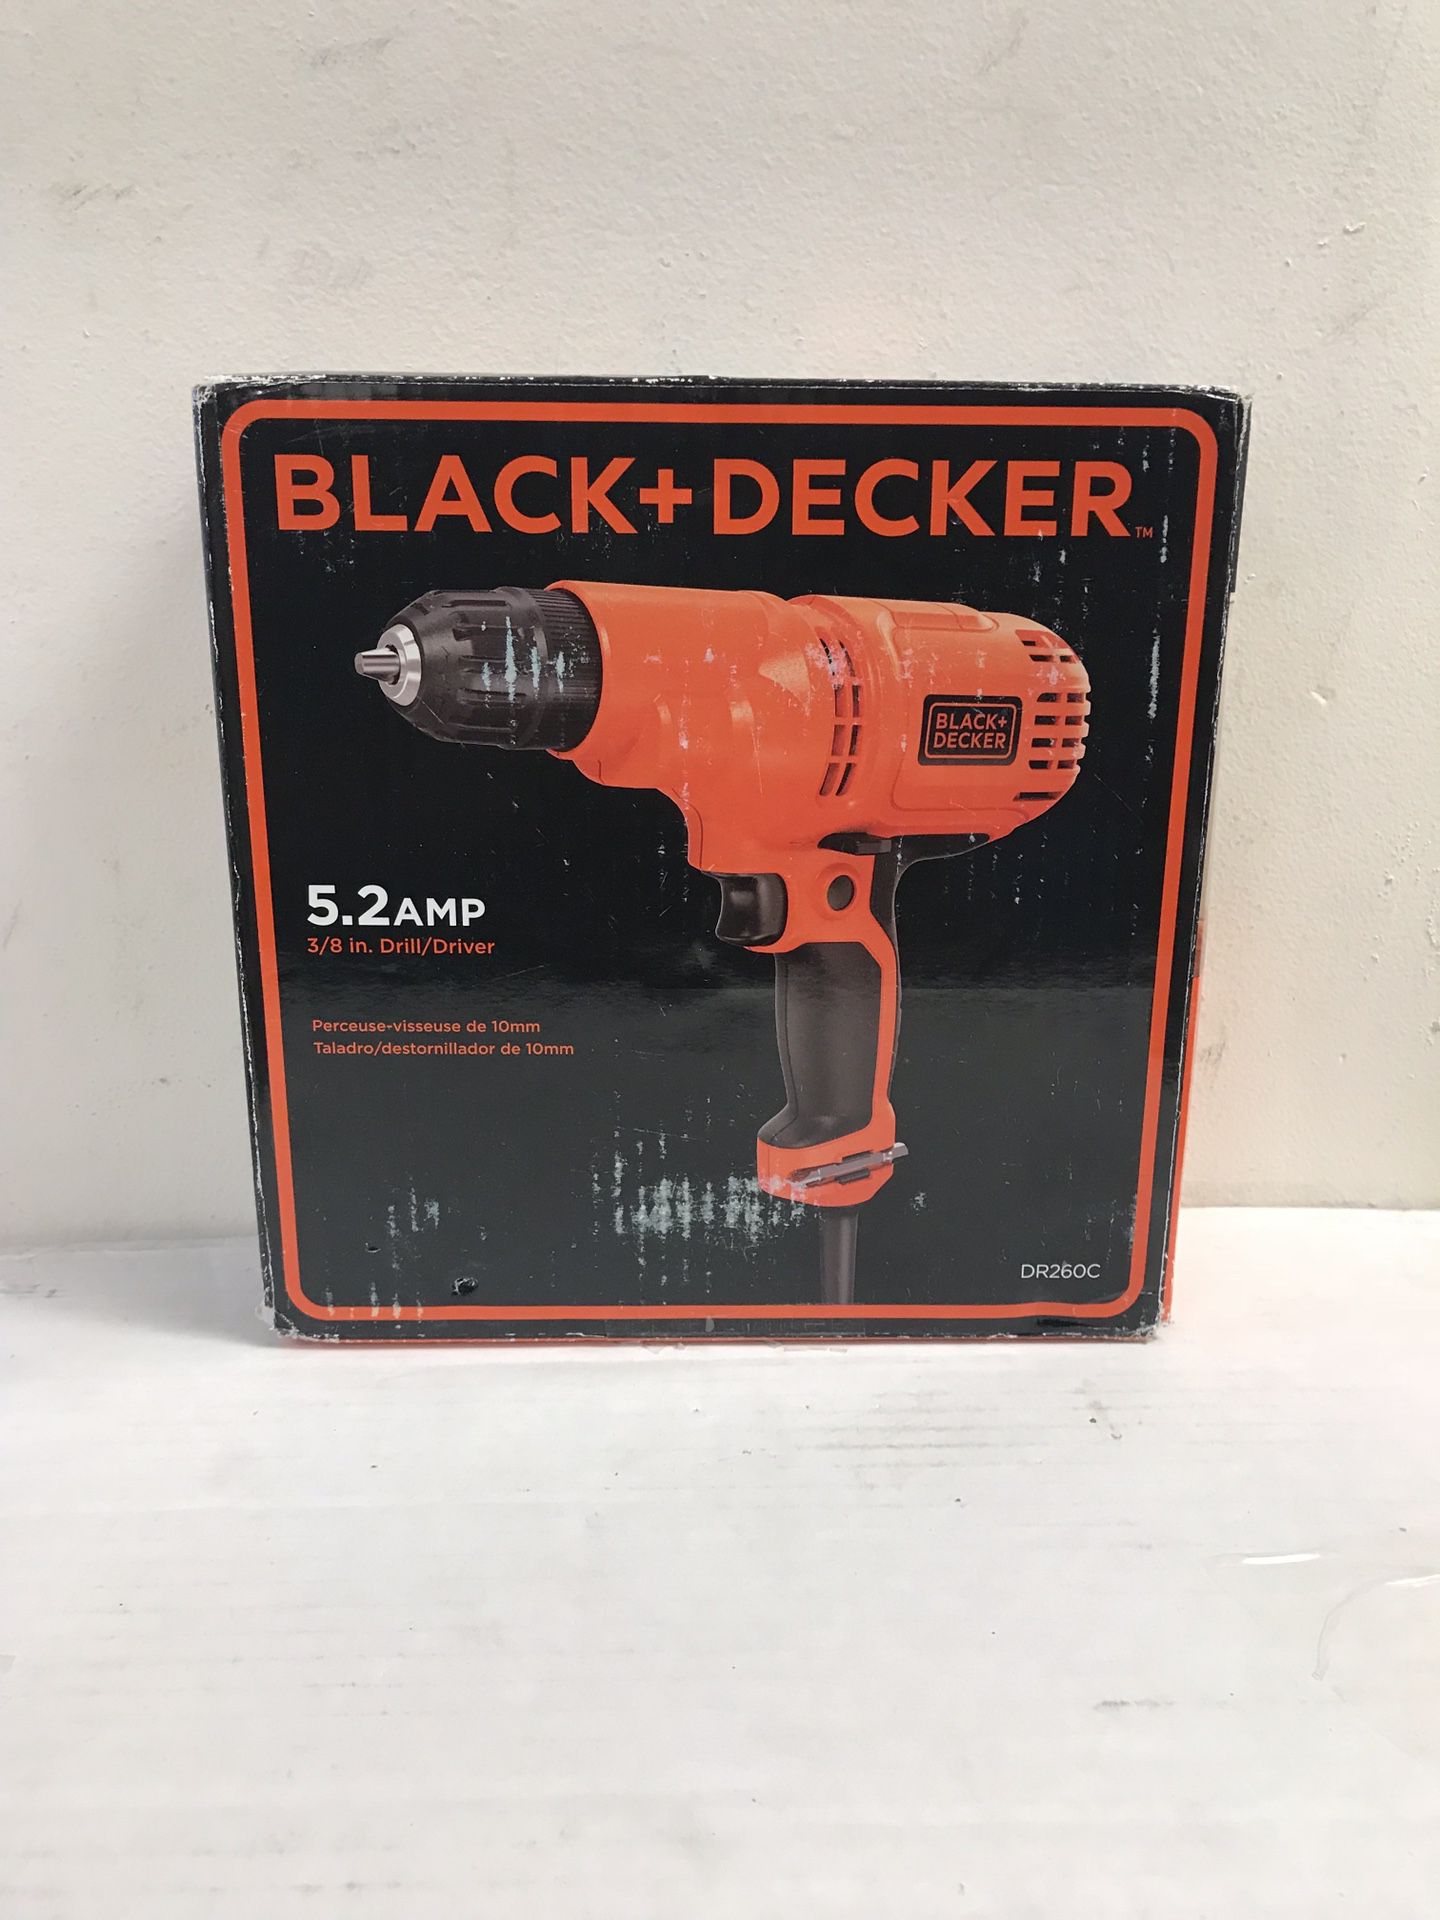 Black + Decker 5.2 amp Drill